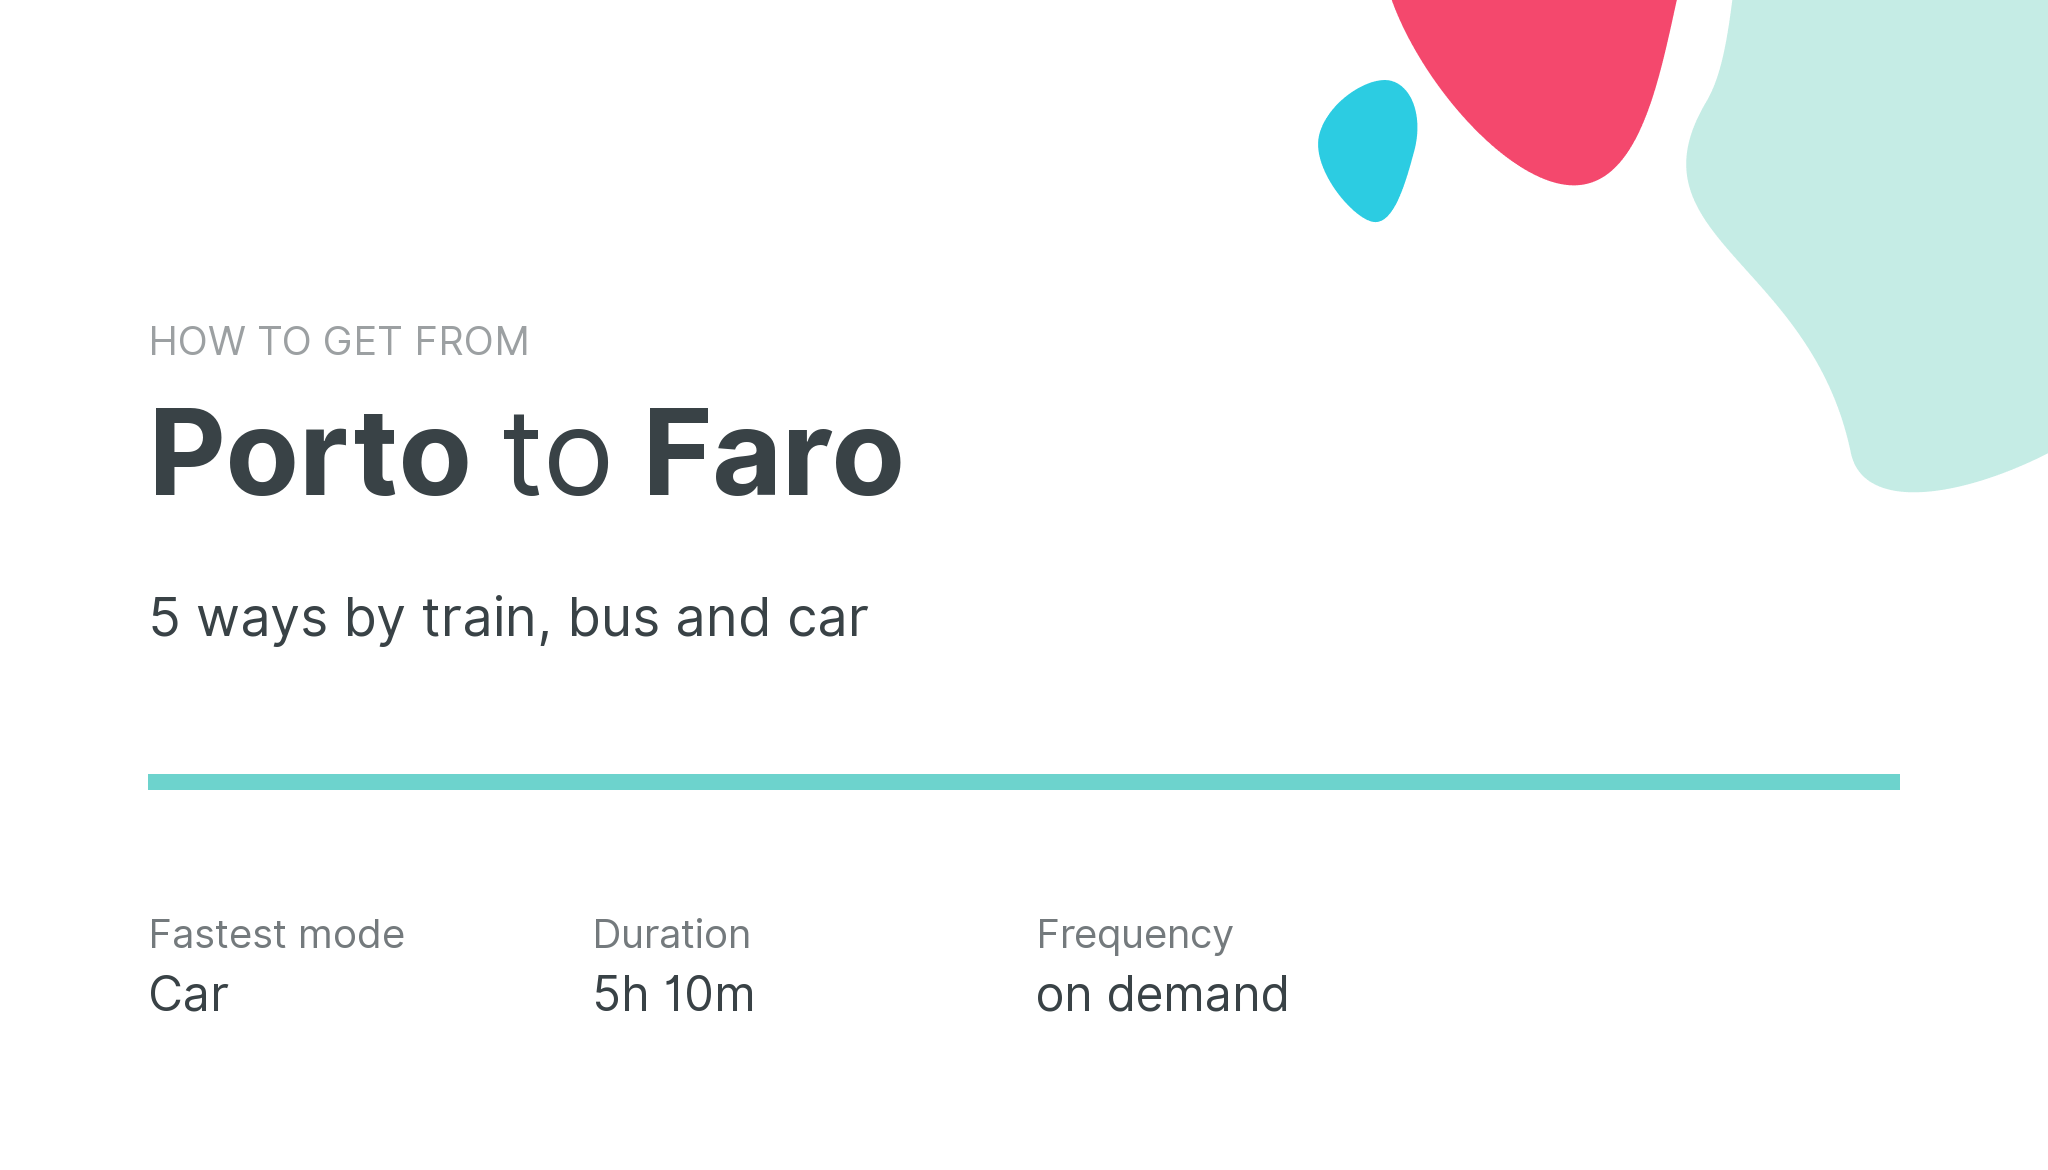 How do I get from Porto to Faro